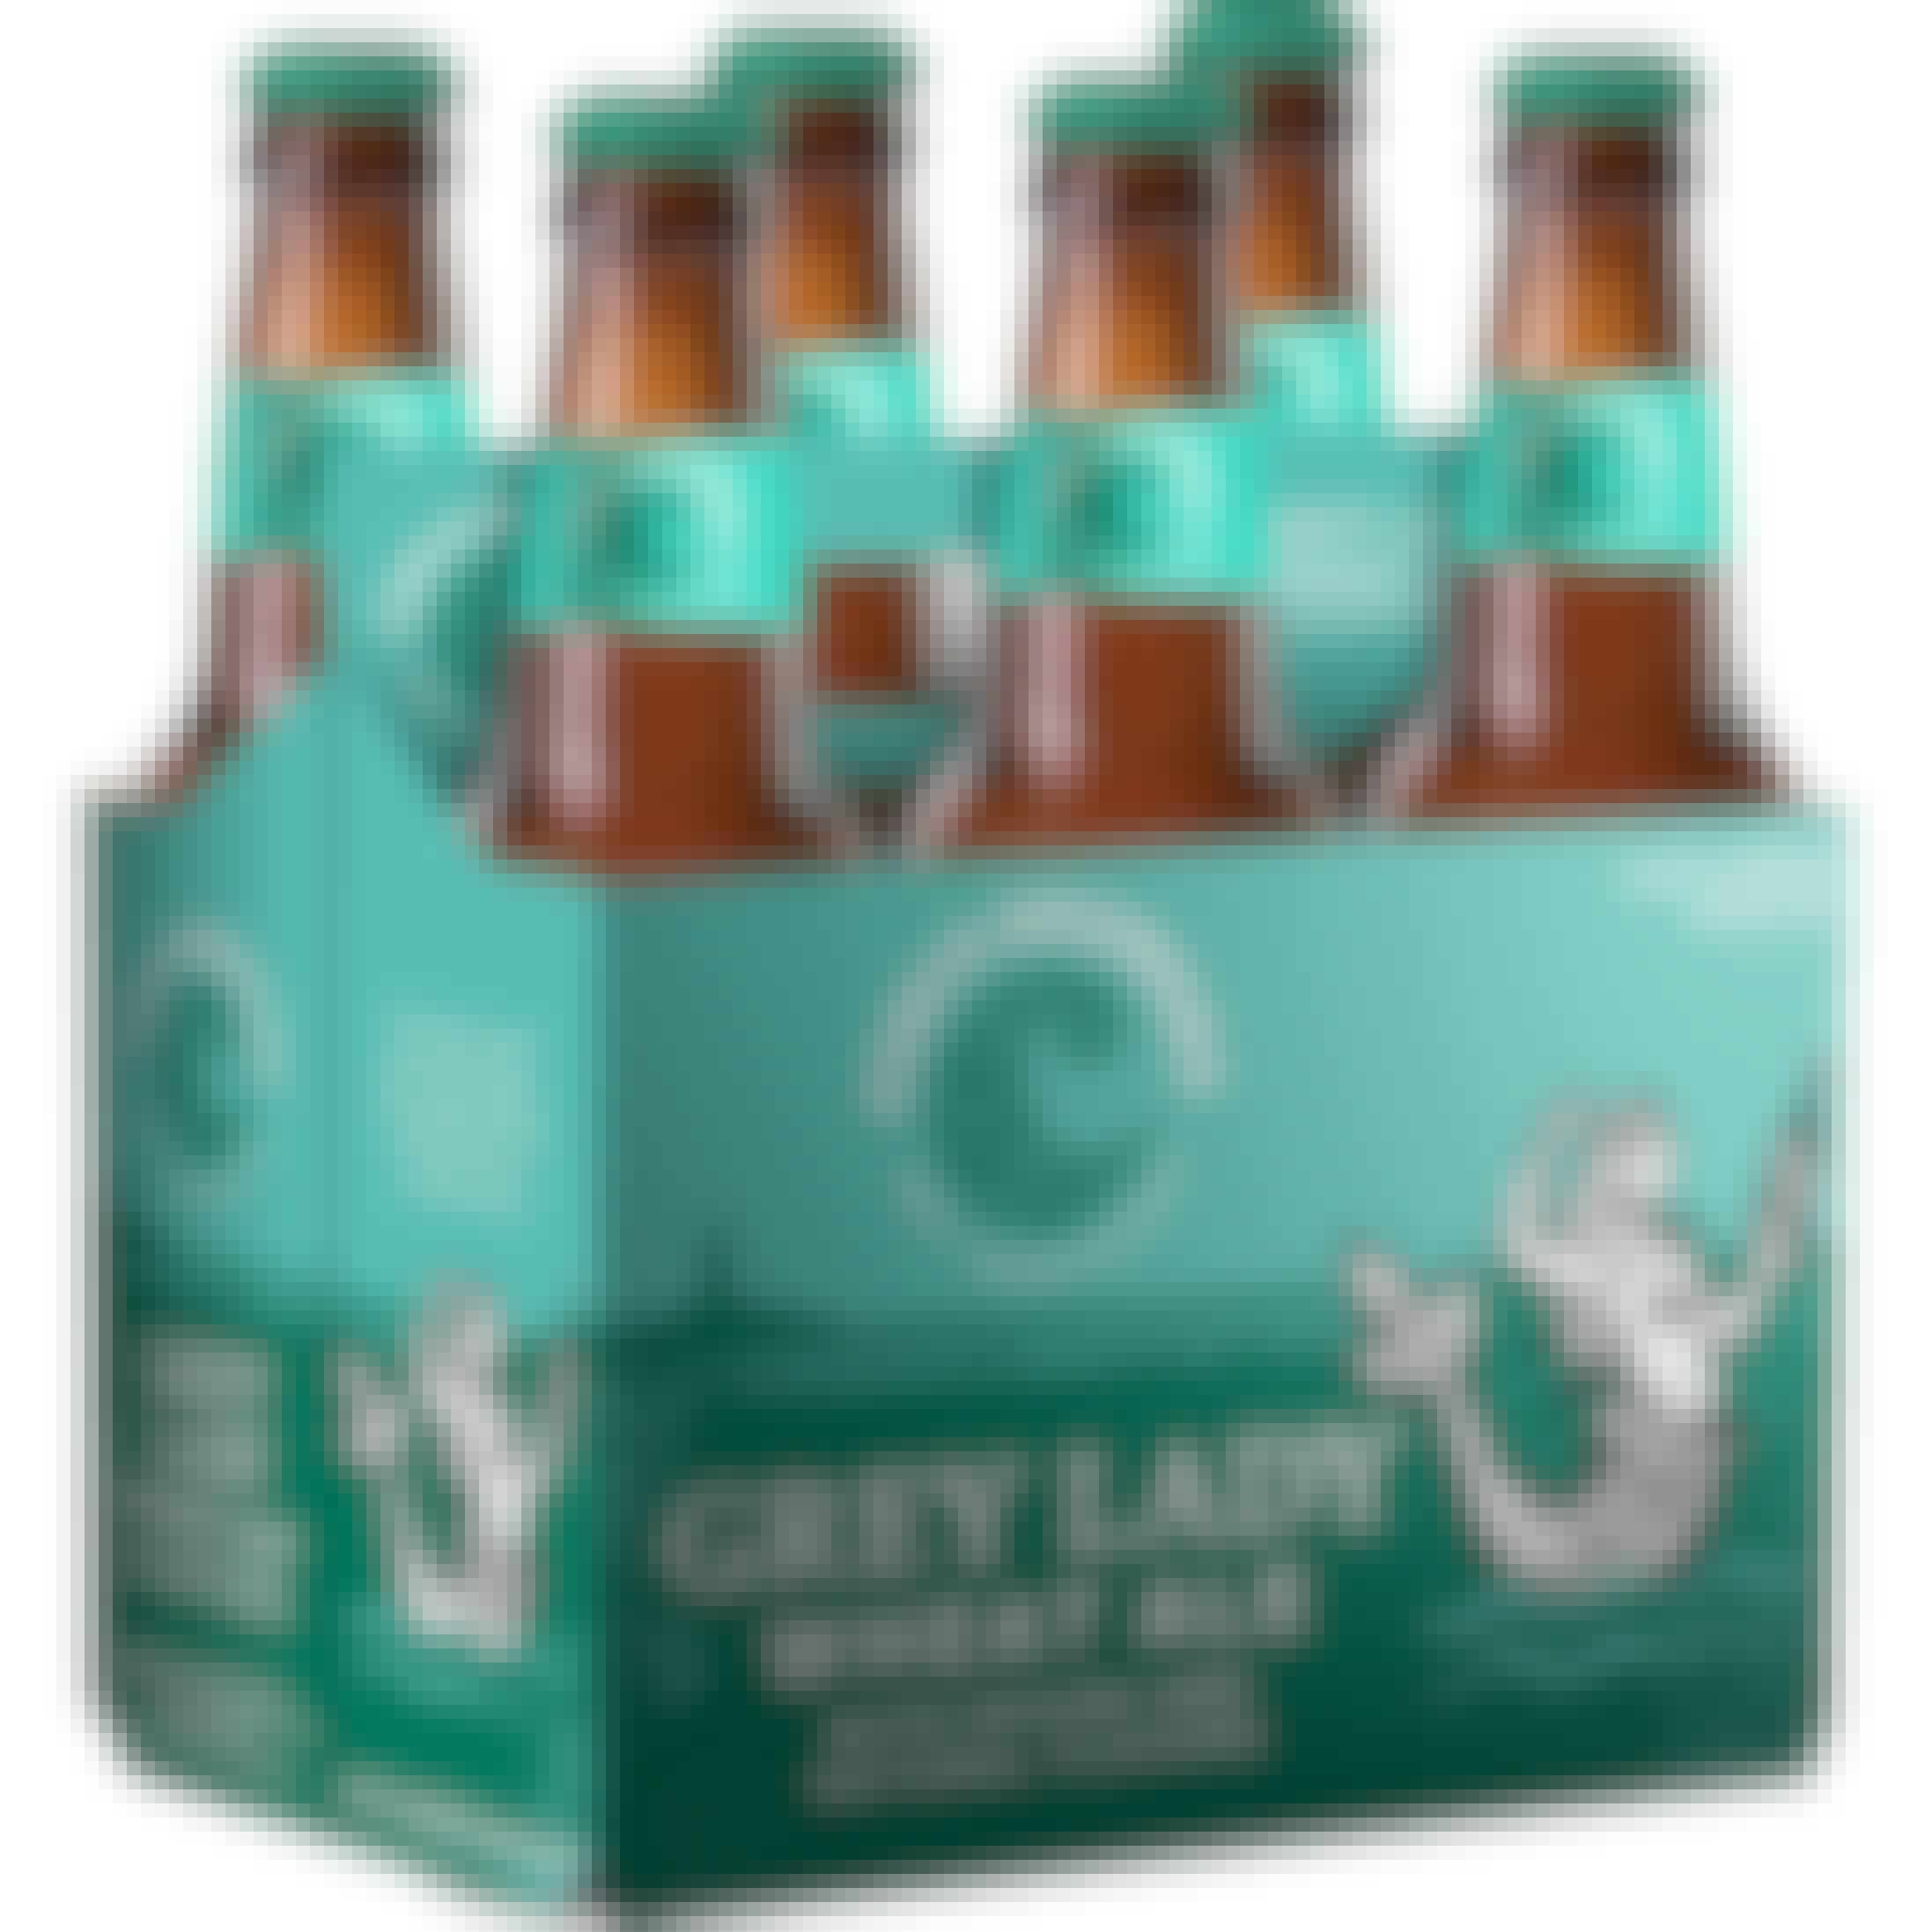 Cisco Brewers Grey Lady Ale 6 pack 12 oz. Bottle